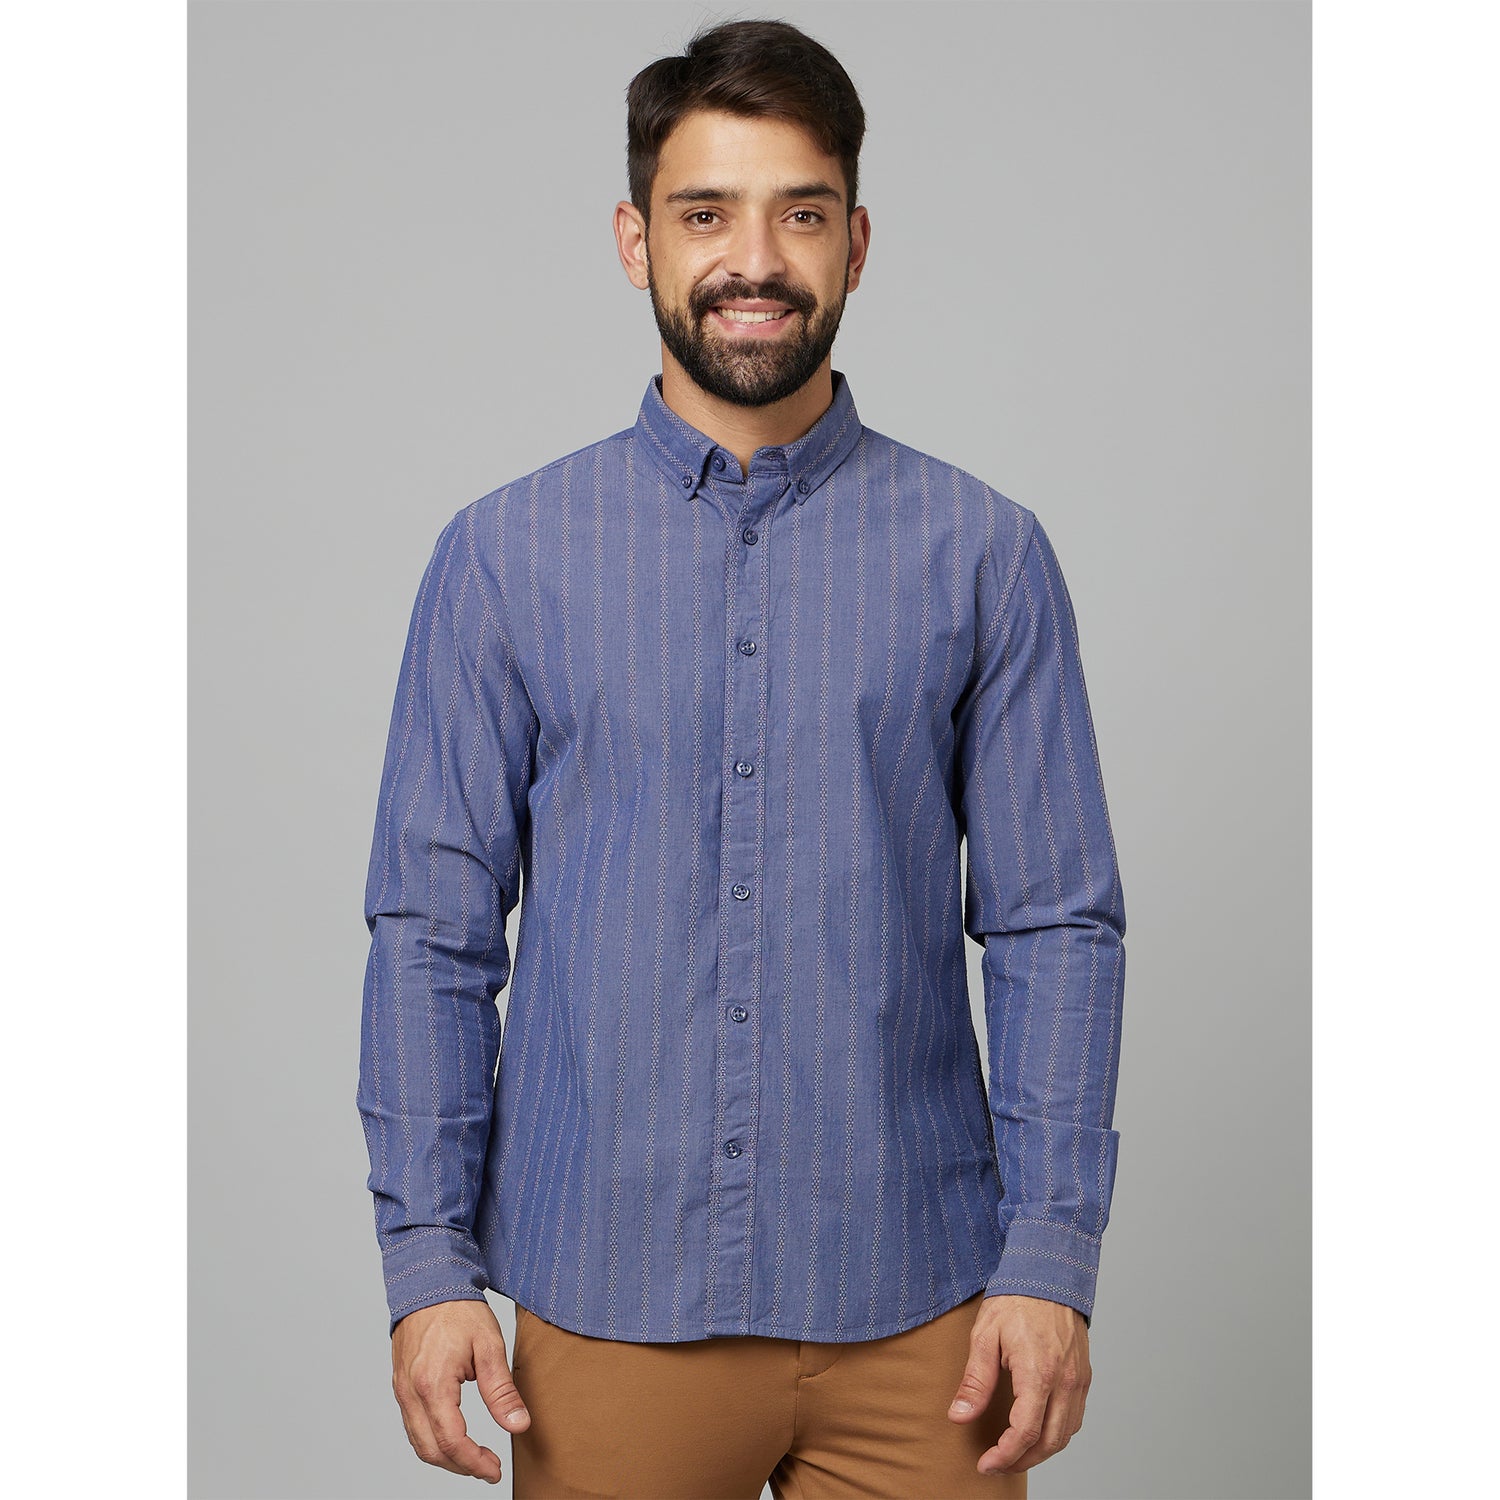 Blue Classic Fit Vertical Striped Button Down Collar Cotton Casual Shirt (DAJACLINE)